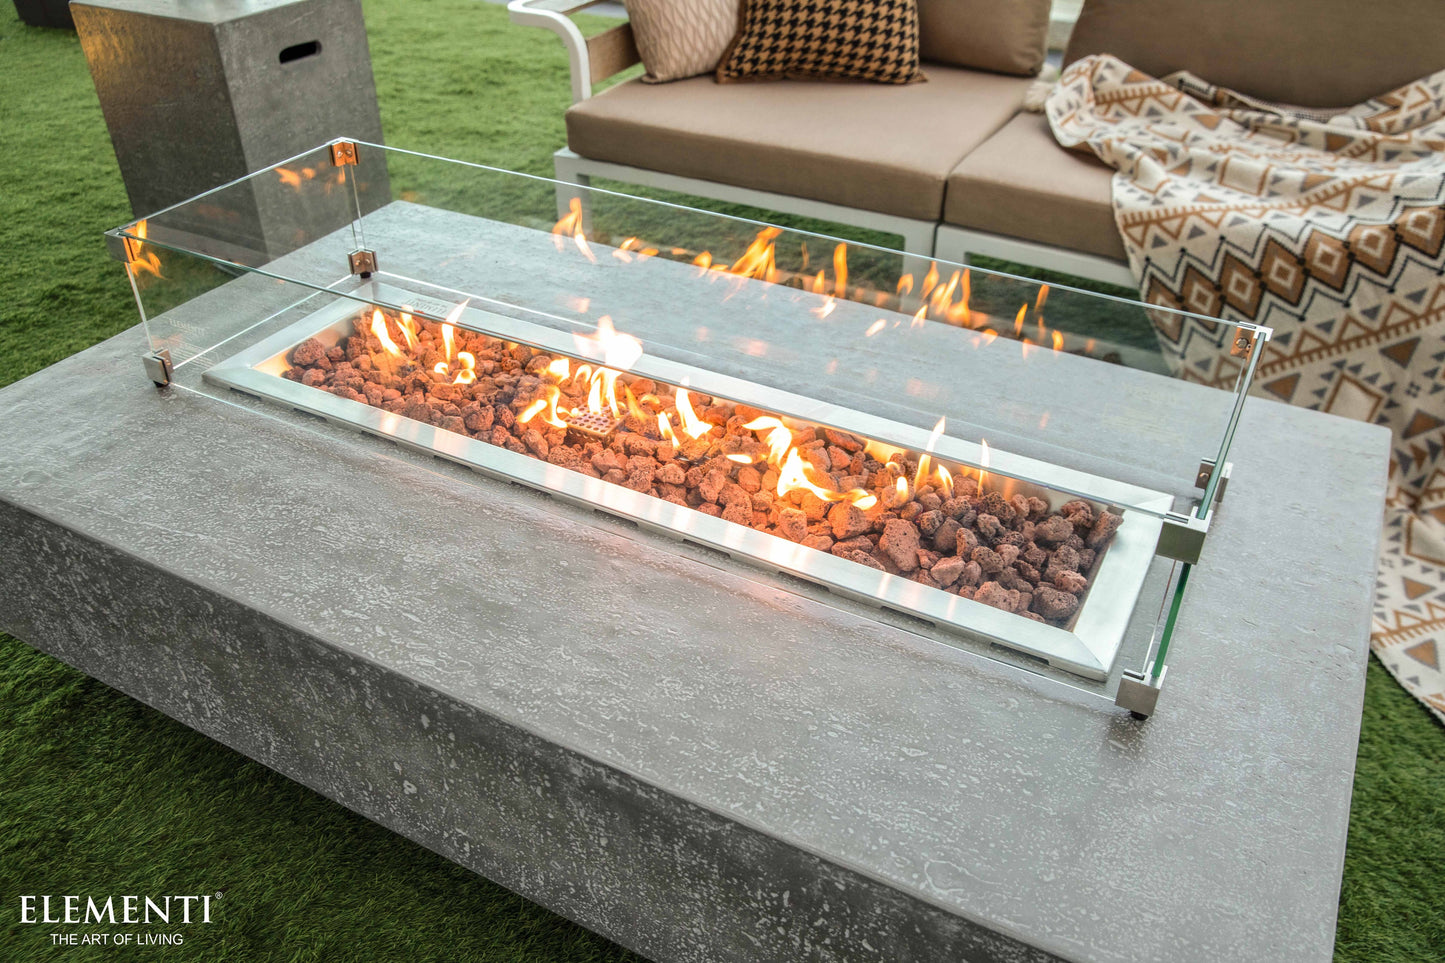 Hampton Natural Limestone Concrete Rectangular Fire Pit Table - Light Gray